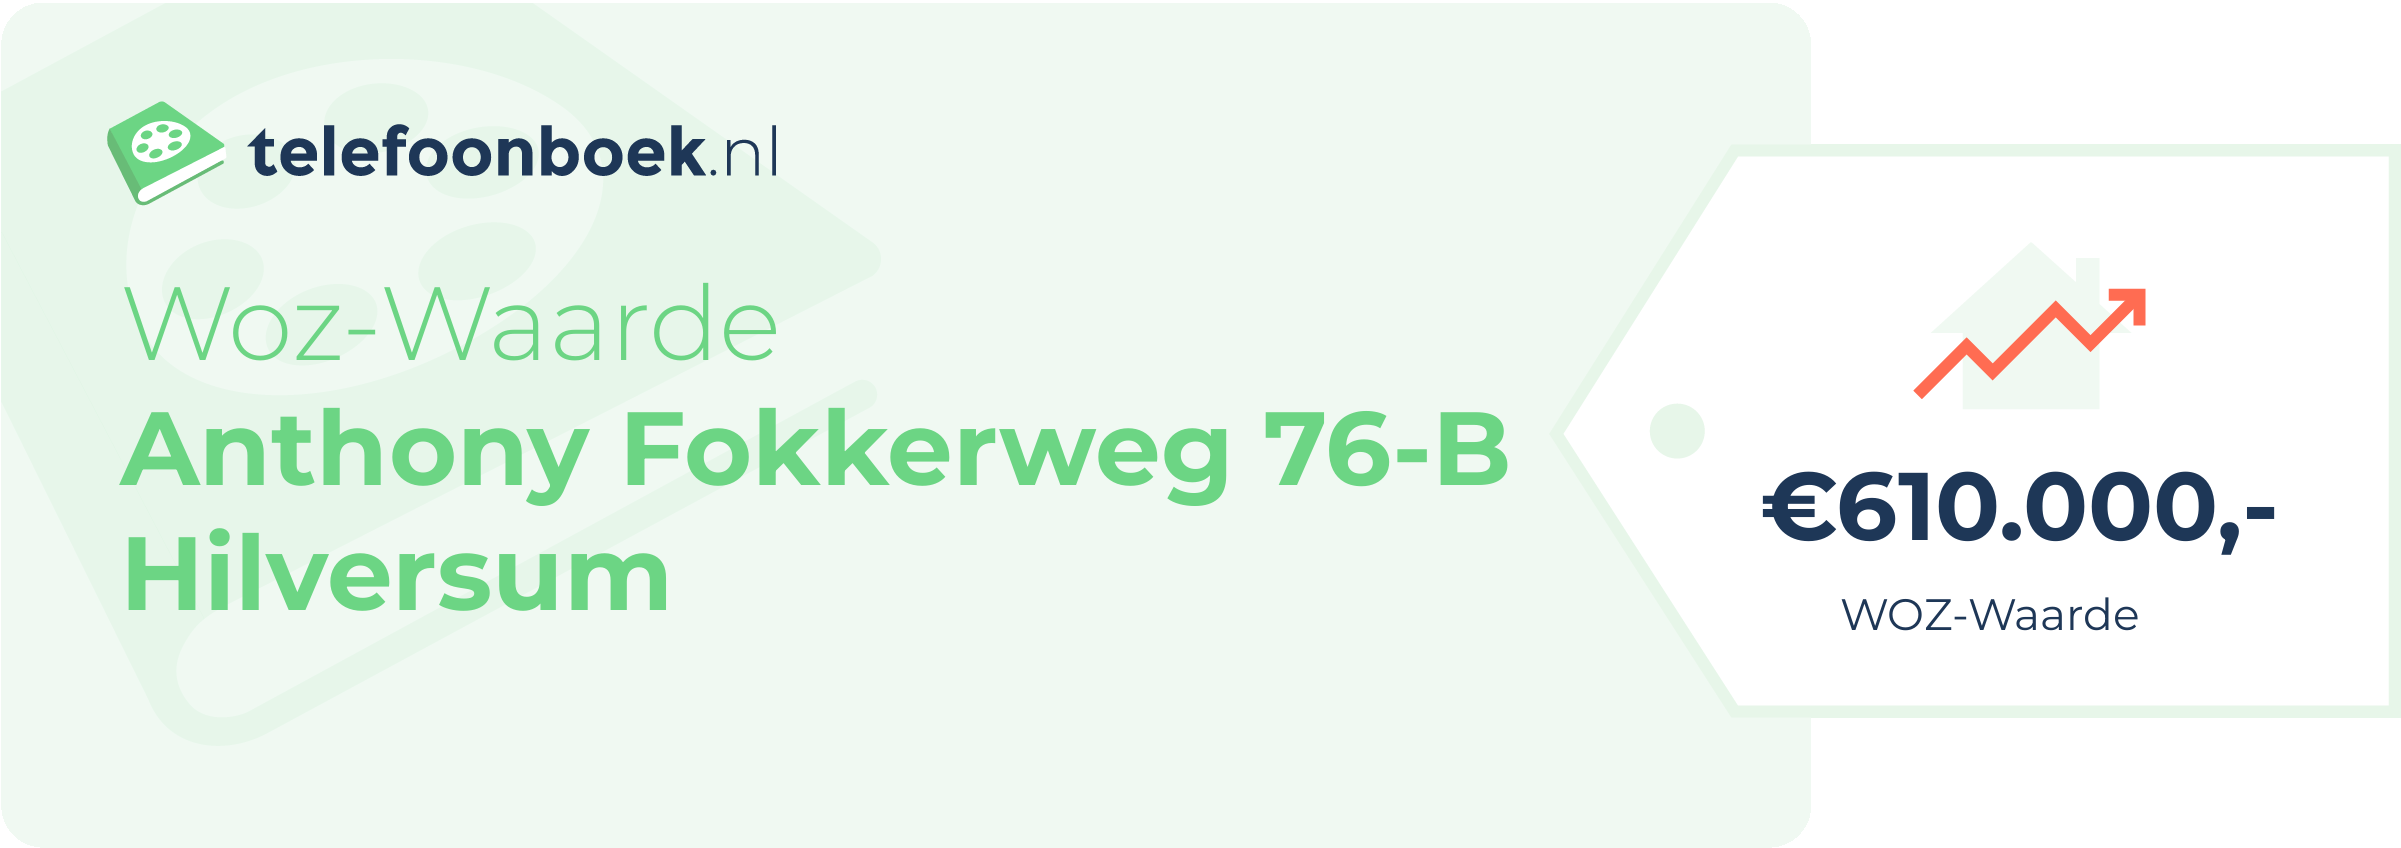 WOZ-waarde Anthony Fokkerweg 76-B Hilversum